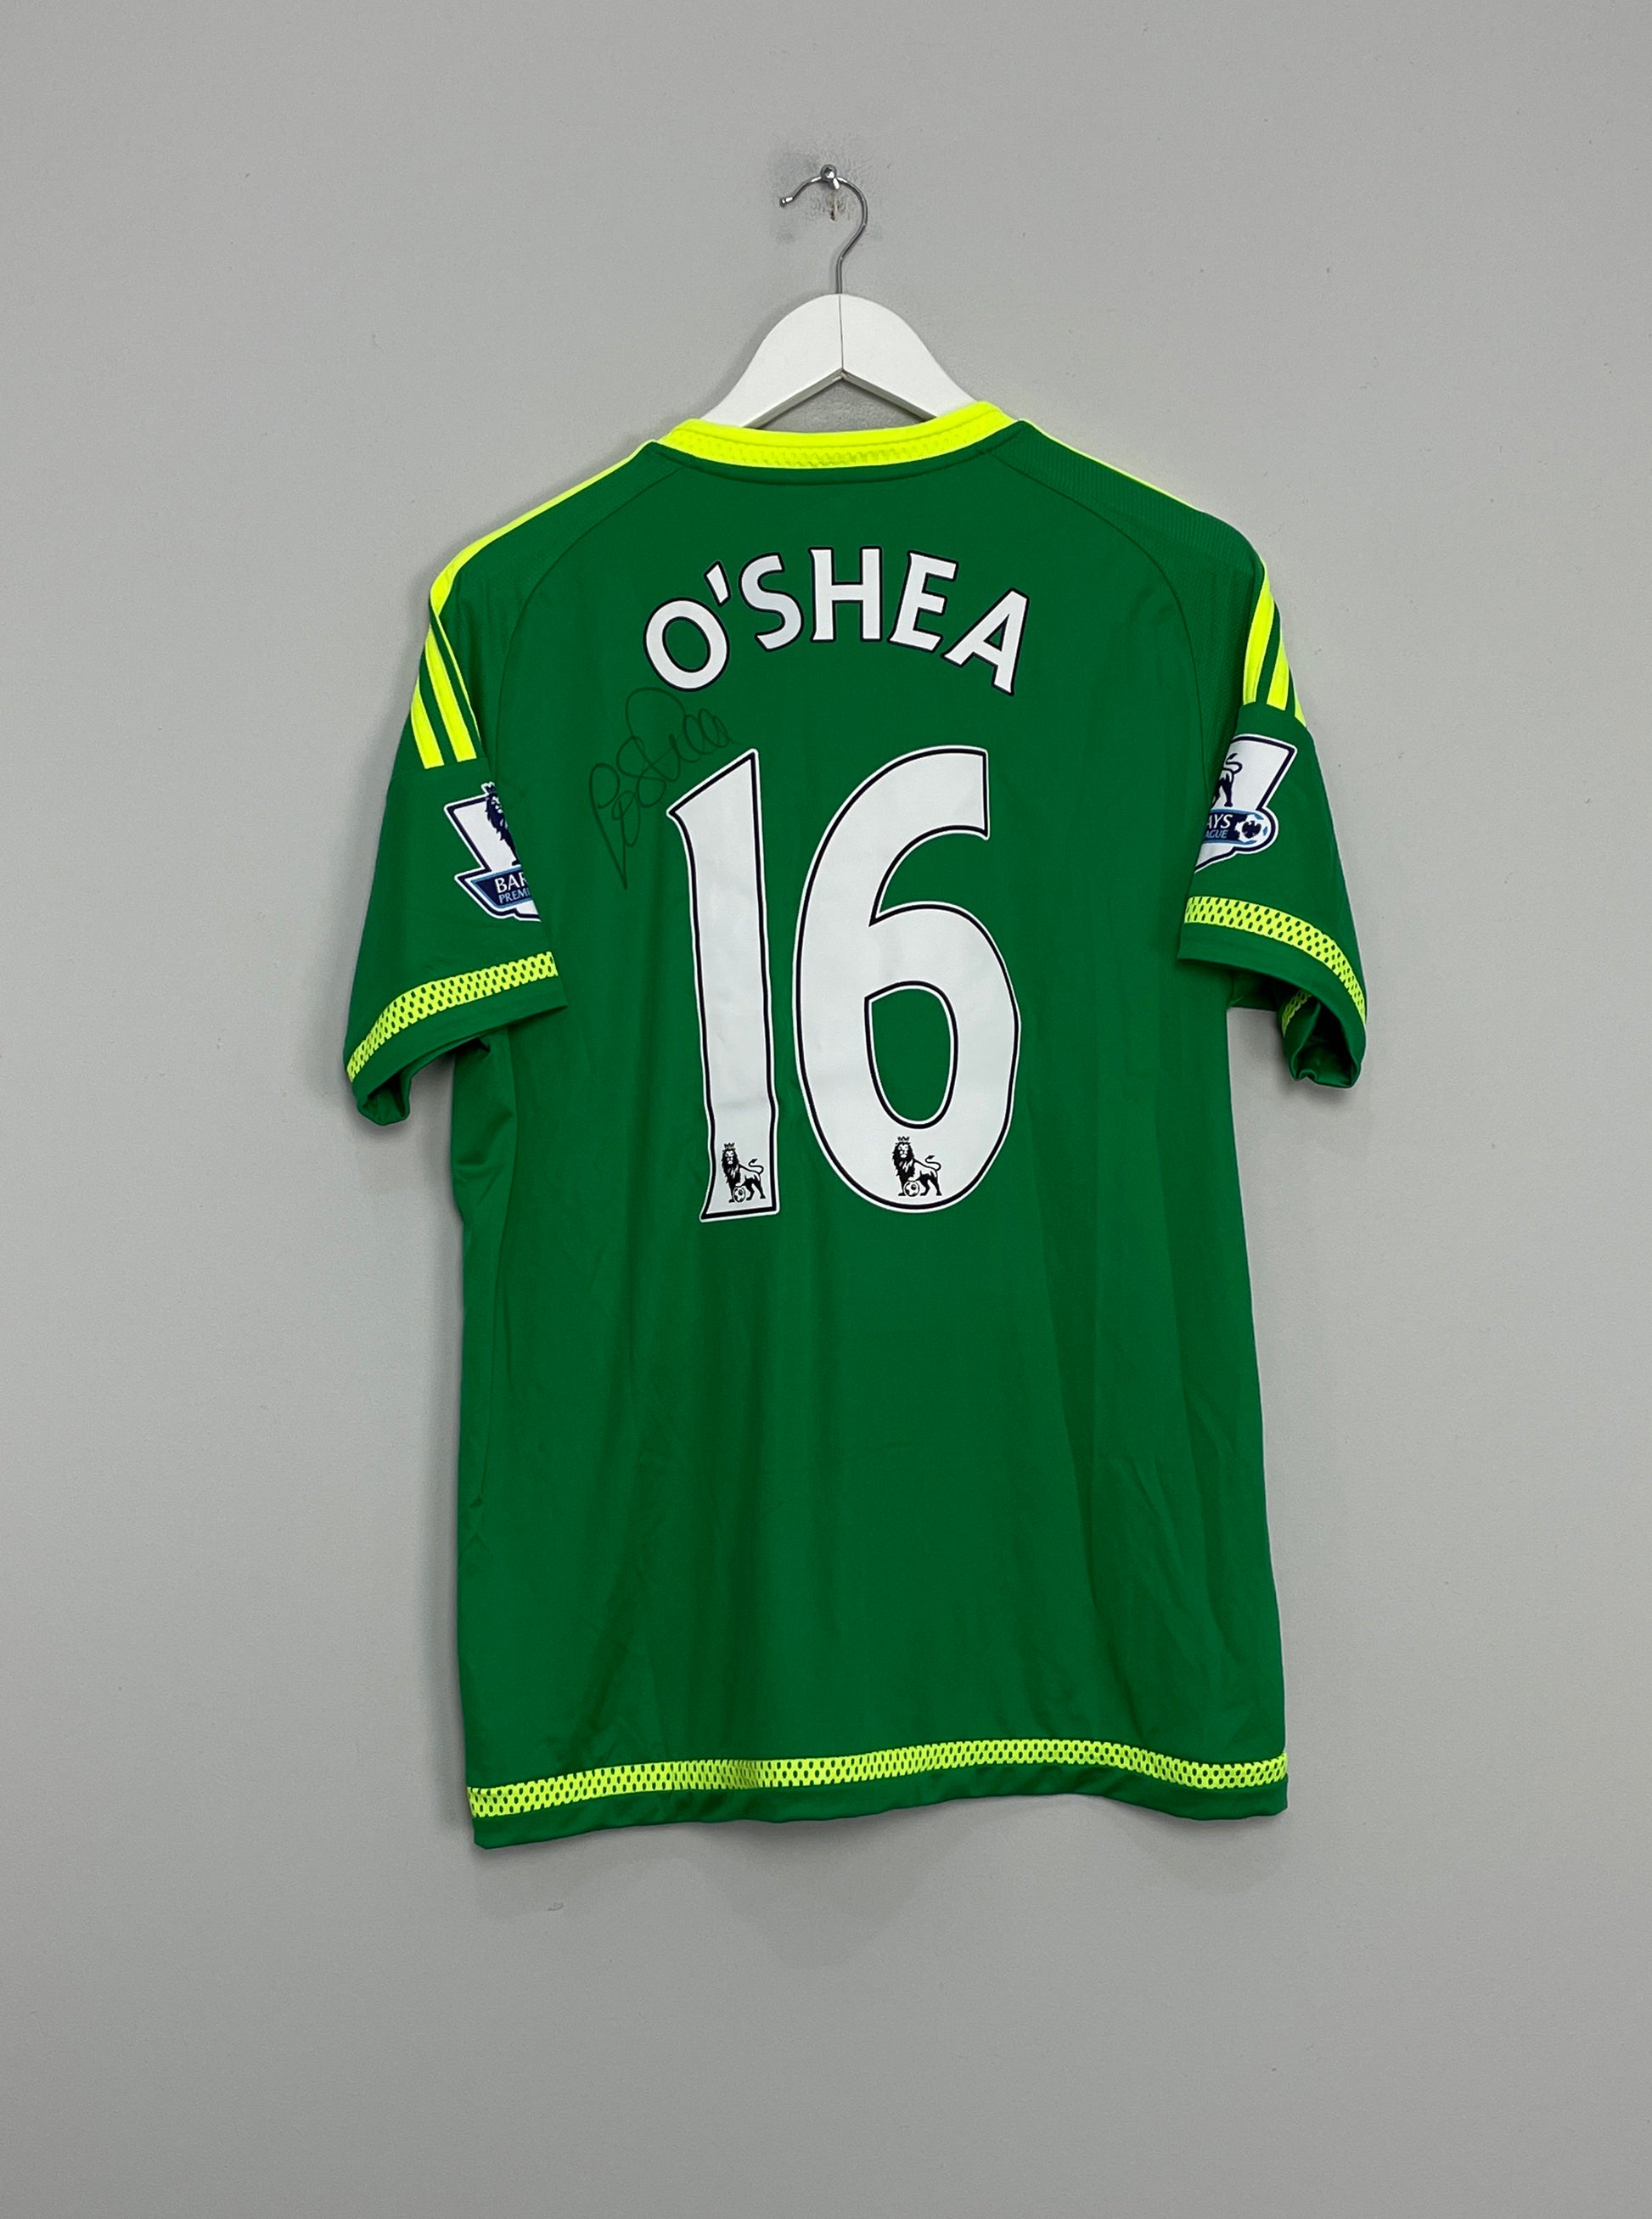 Image of Sunderland O'Shea shirt from the 2015/16 season